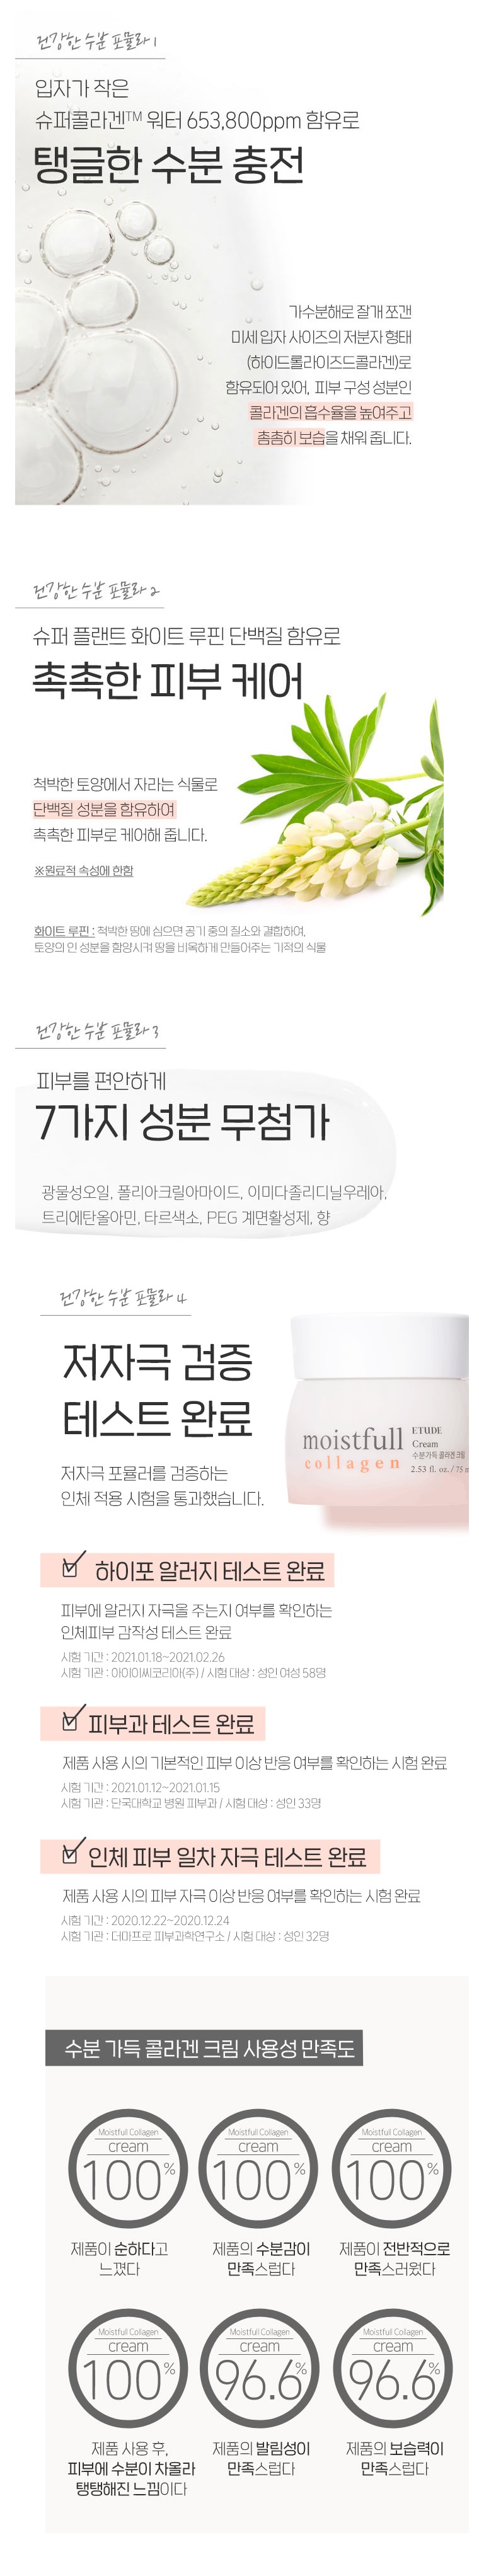 Etude House Moistfull Collagen Cream korean skincare product online shop malaysia china macau3